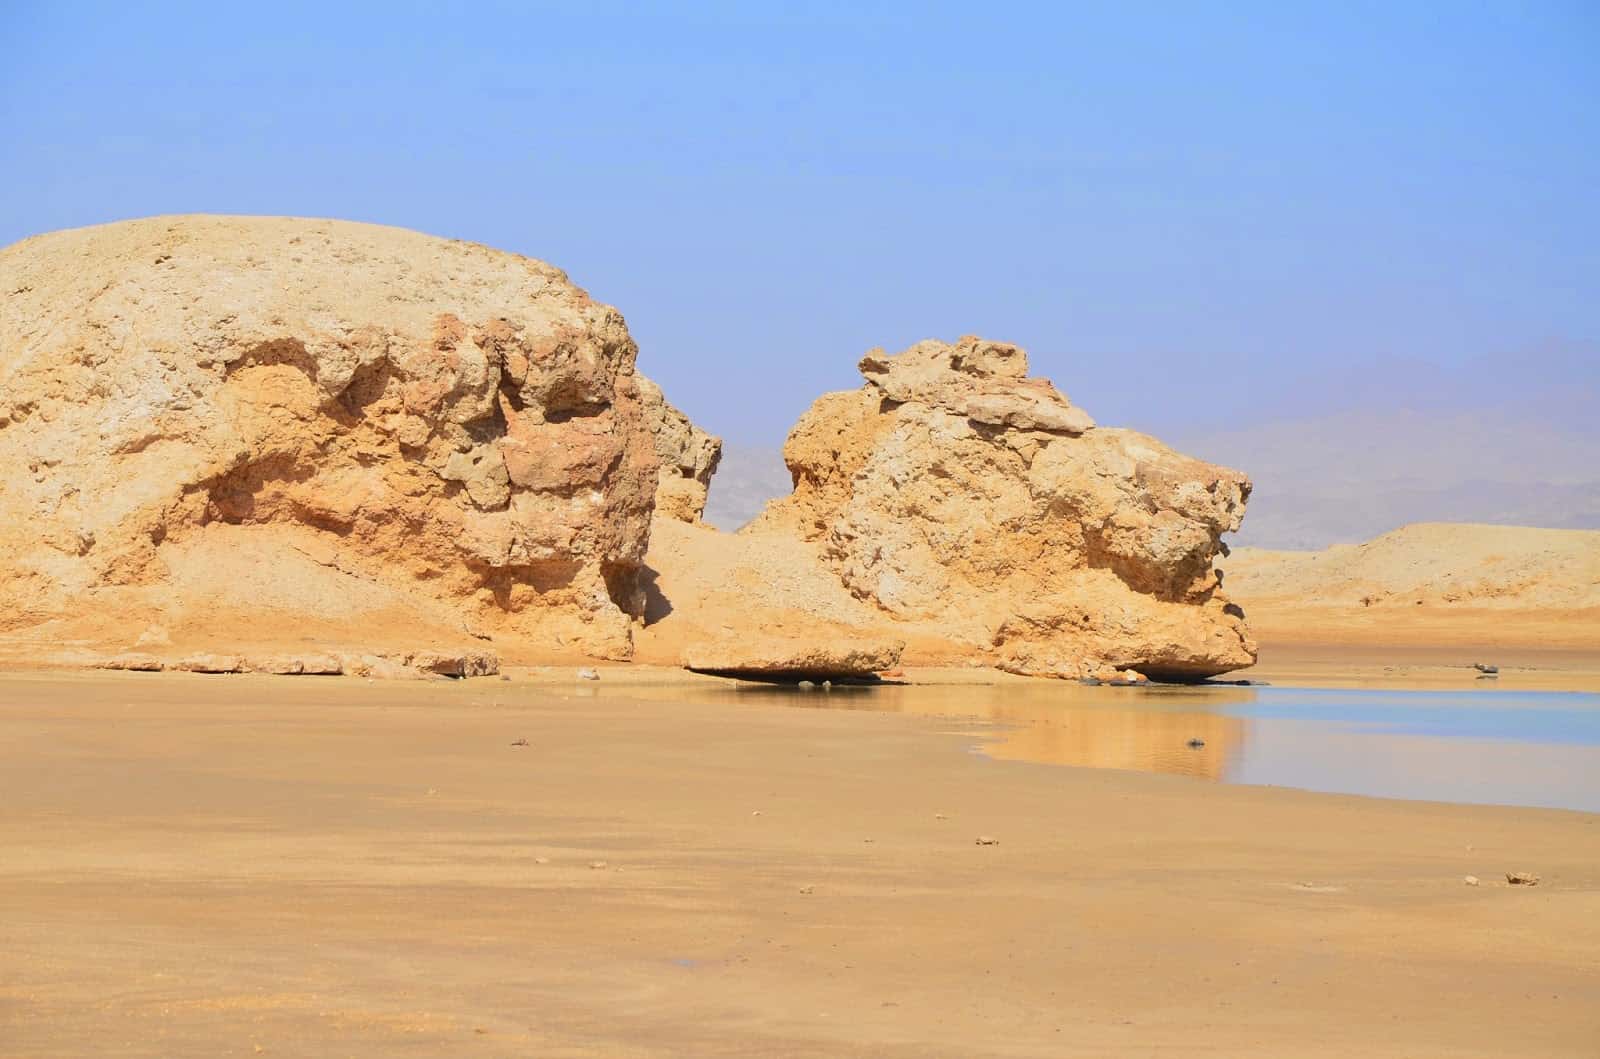 Sleeping lion at Ras Mohammad National Park in Sinai, Egypt